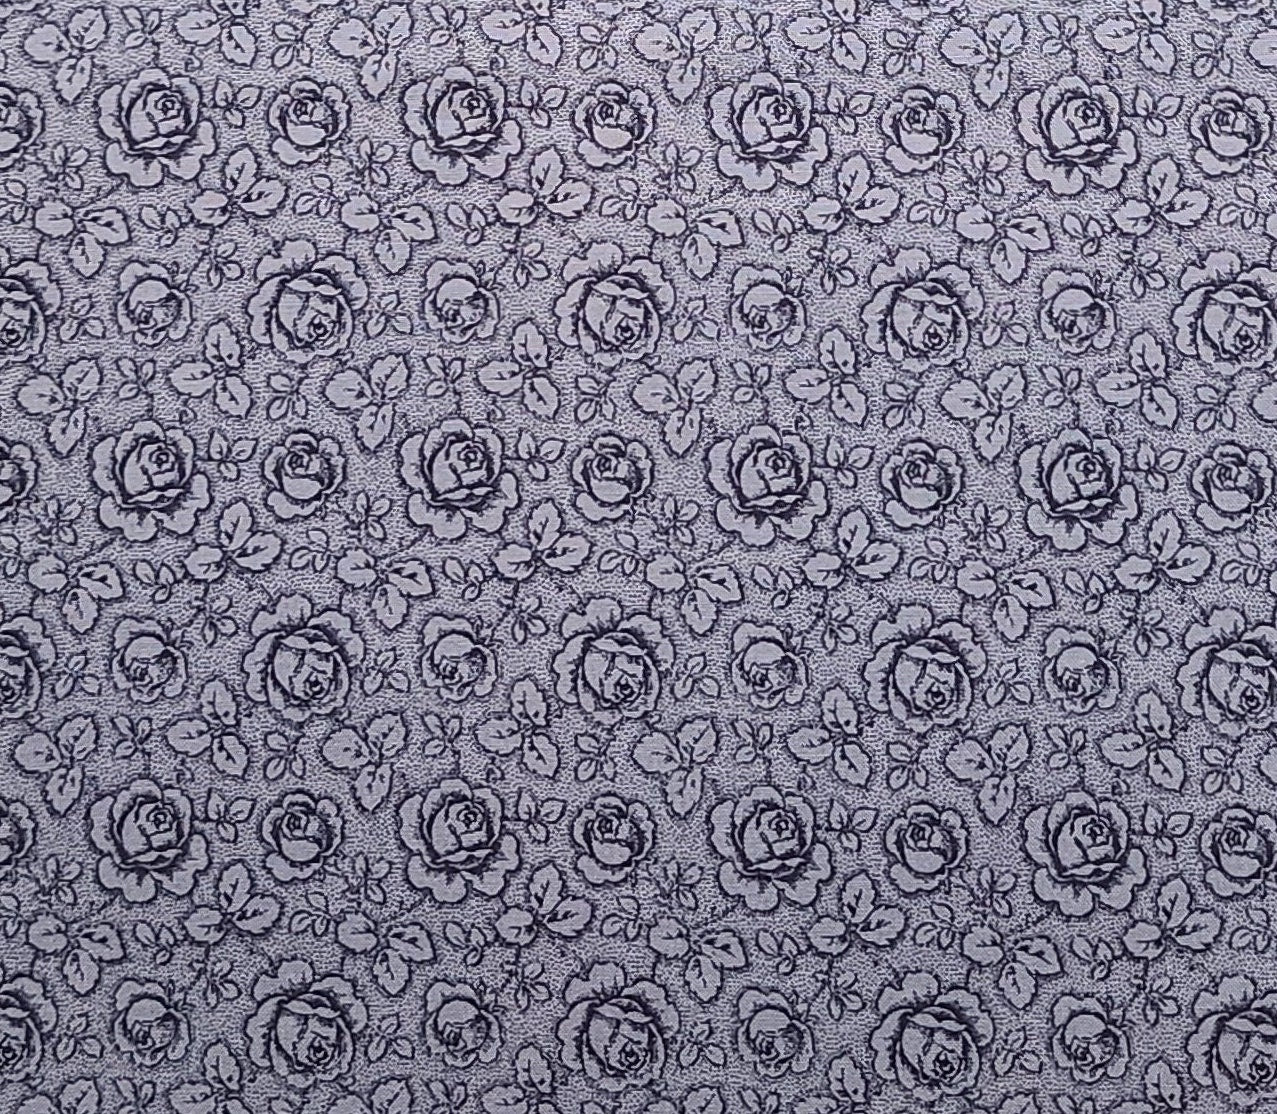 VIP Print by Joan Messmore Cranston Print Works - Light Purple Fabric / Dark Purple Silhouette Rose and Leaf Print